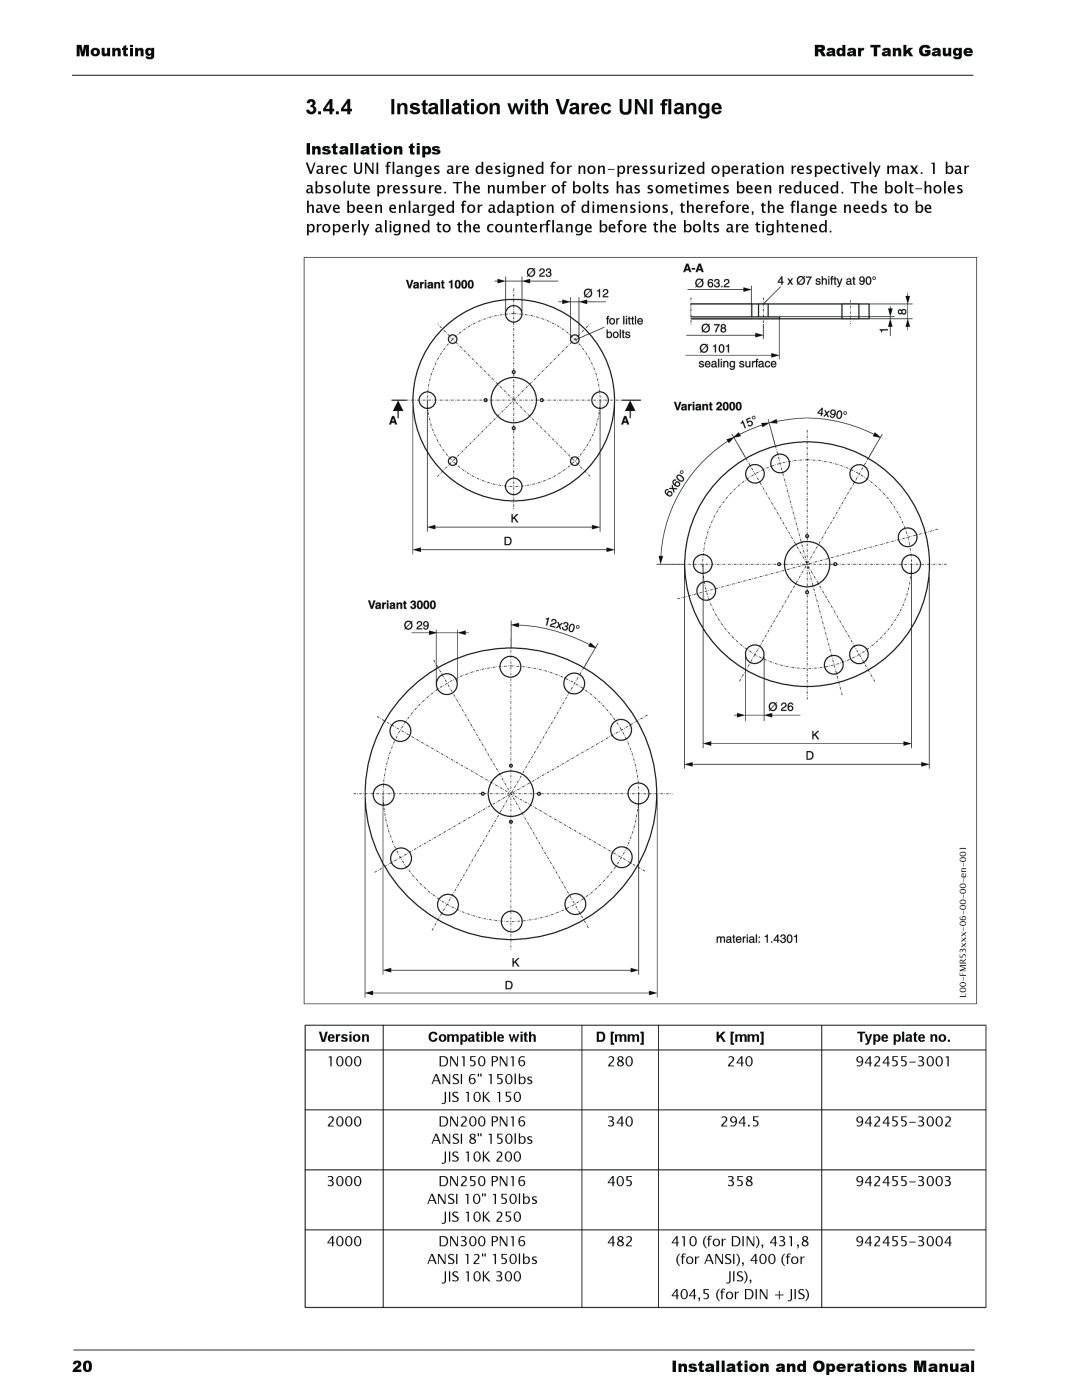 Lightning Audio 7532 manual 3.4.4Installation with Varec UNI flange, Mounting, Radar Tank Gauge, Installation tips 